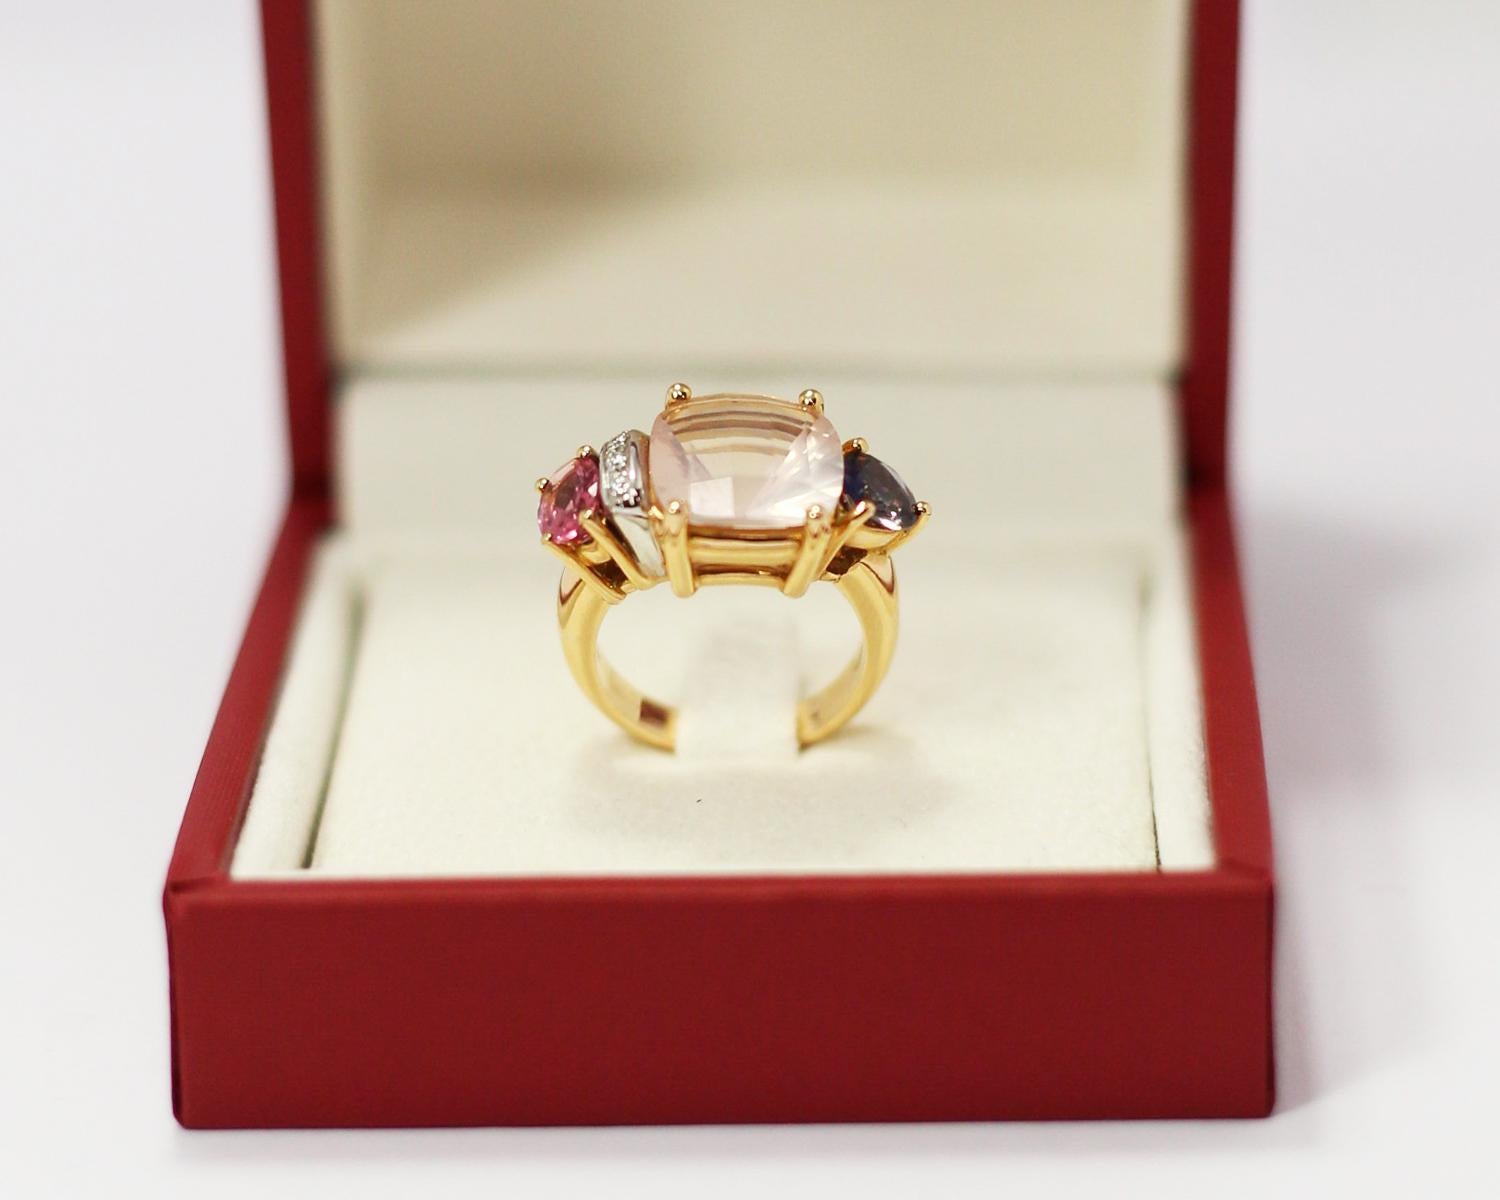 Mangiarotti Moonstone, Sapphire, Pink Tourmaline Ring in 18kt Gold and Diamonds 2